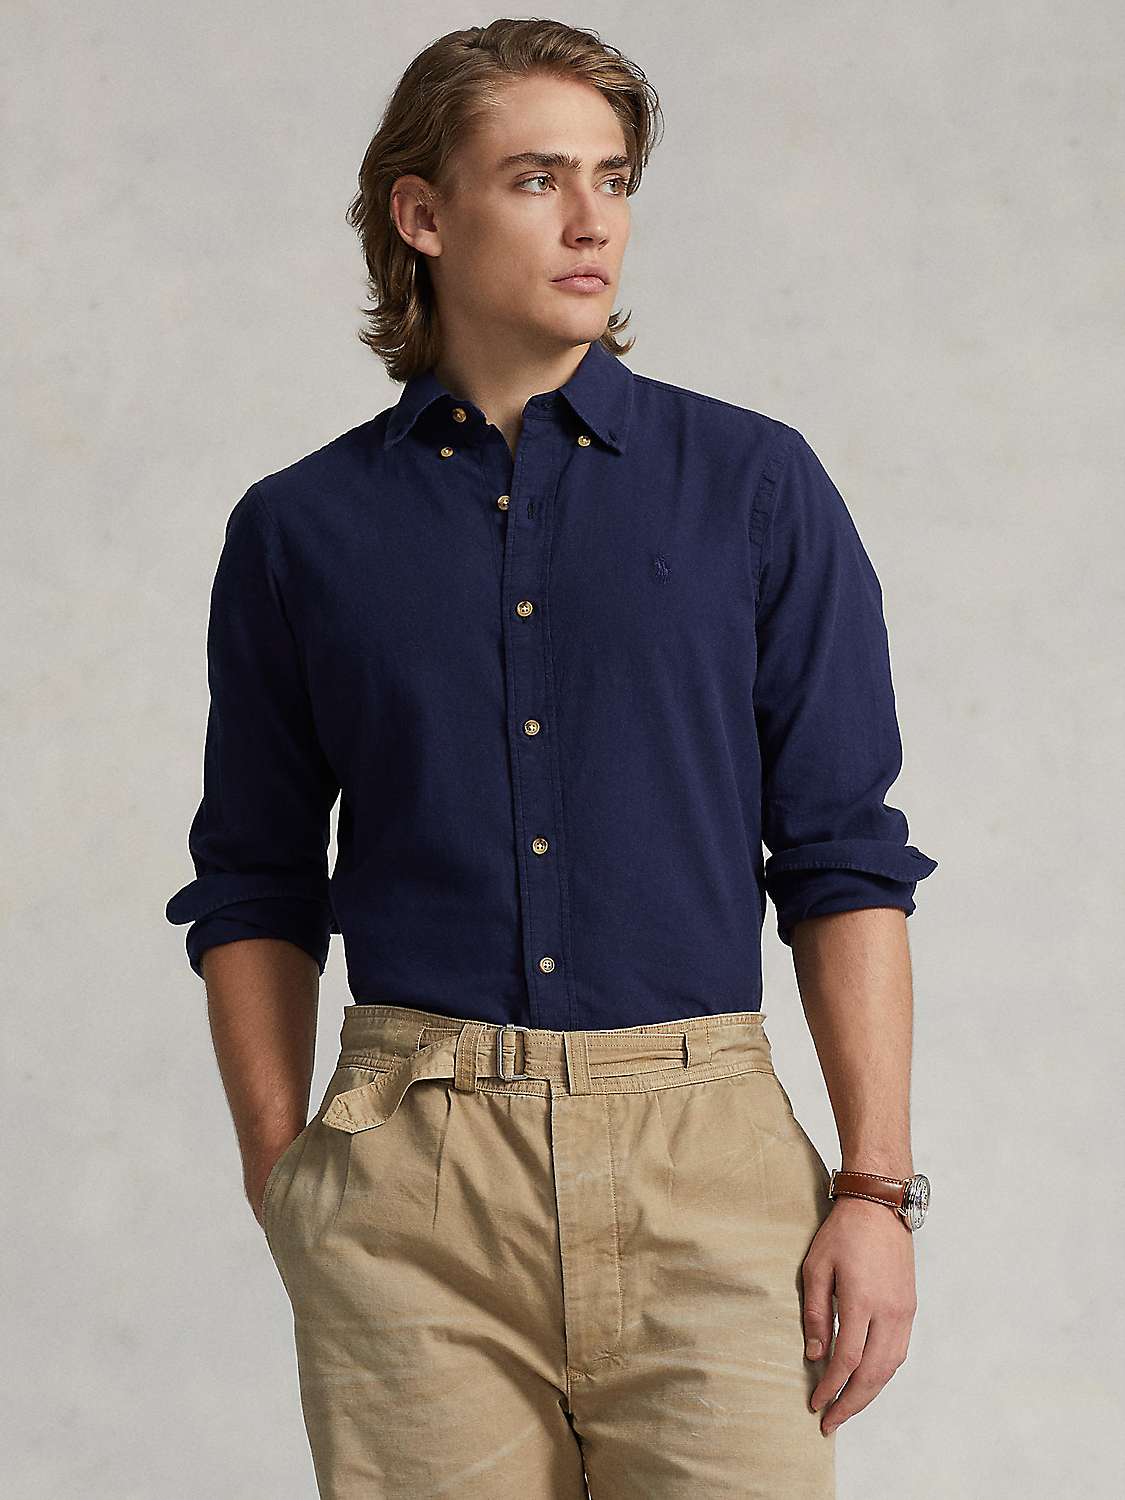 Buy Polo Ralph Lauren Cotton Oxford Slim Fit Shirt Online at johnlewis.com